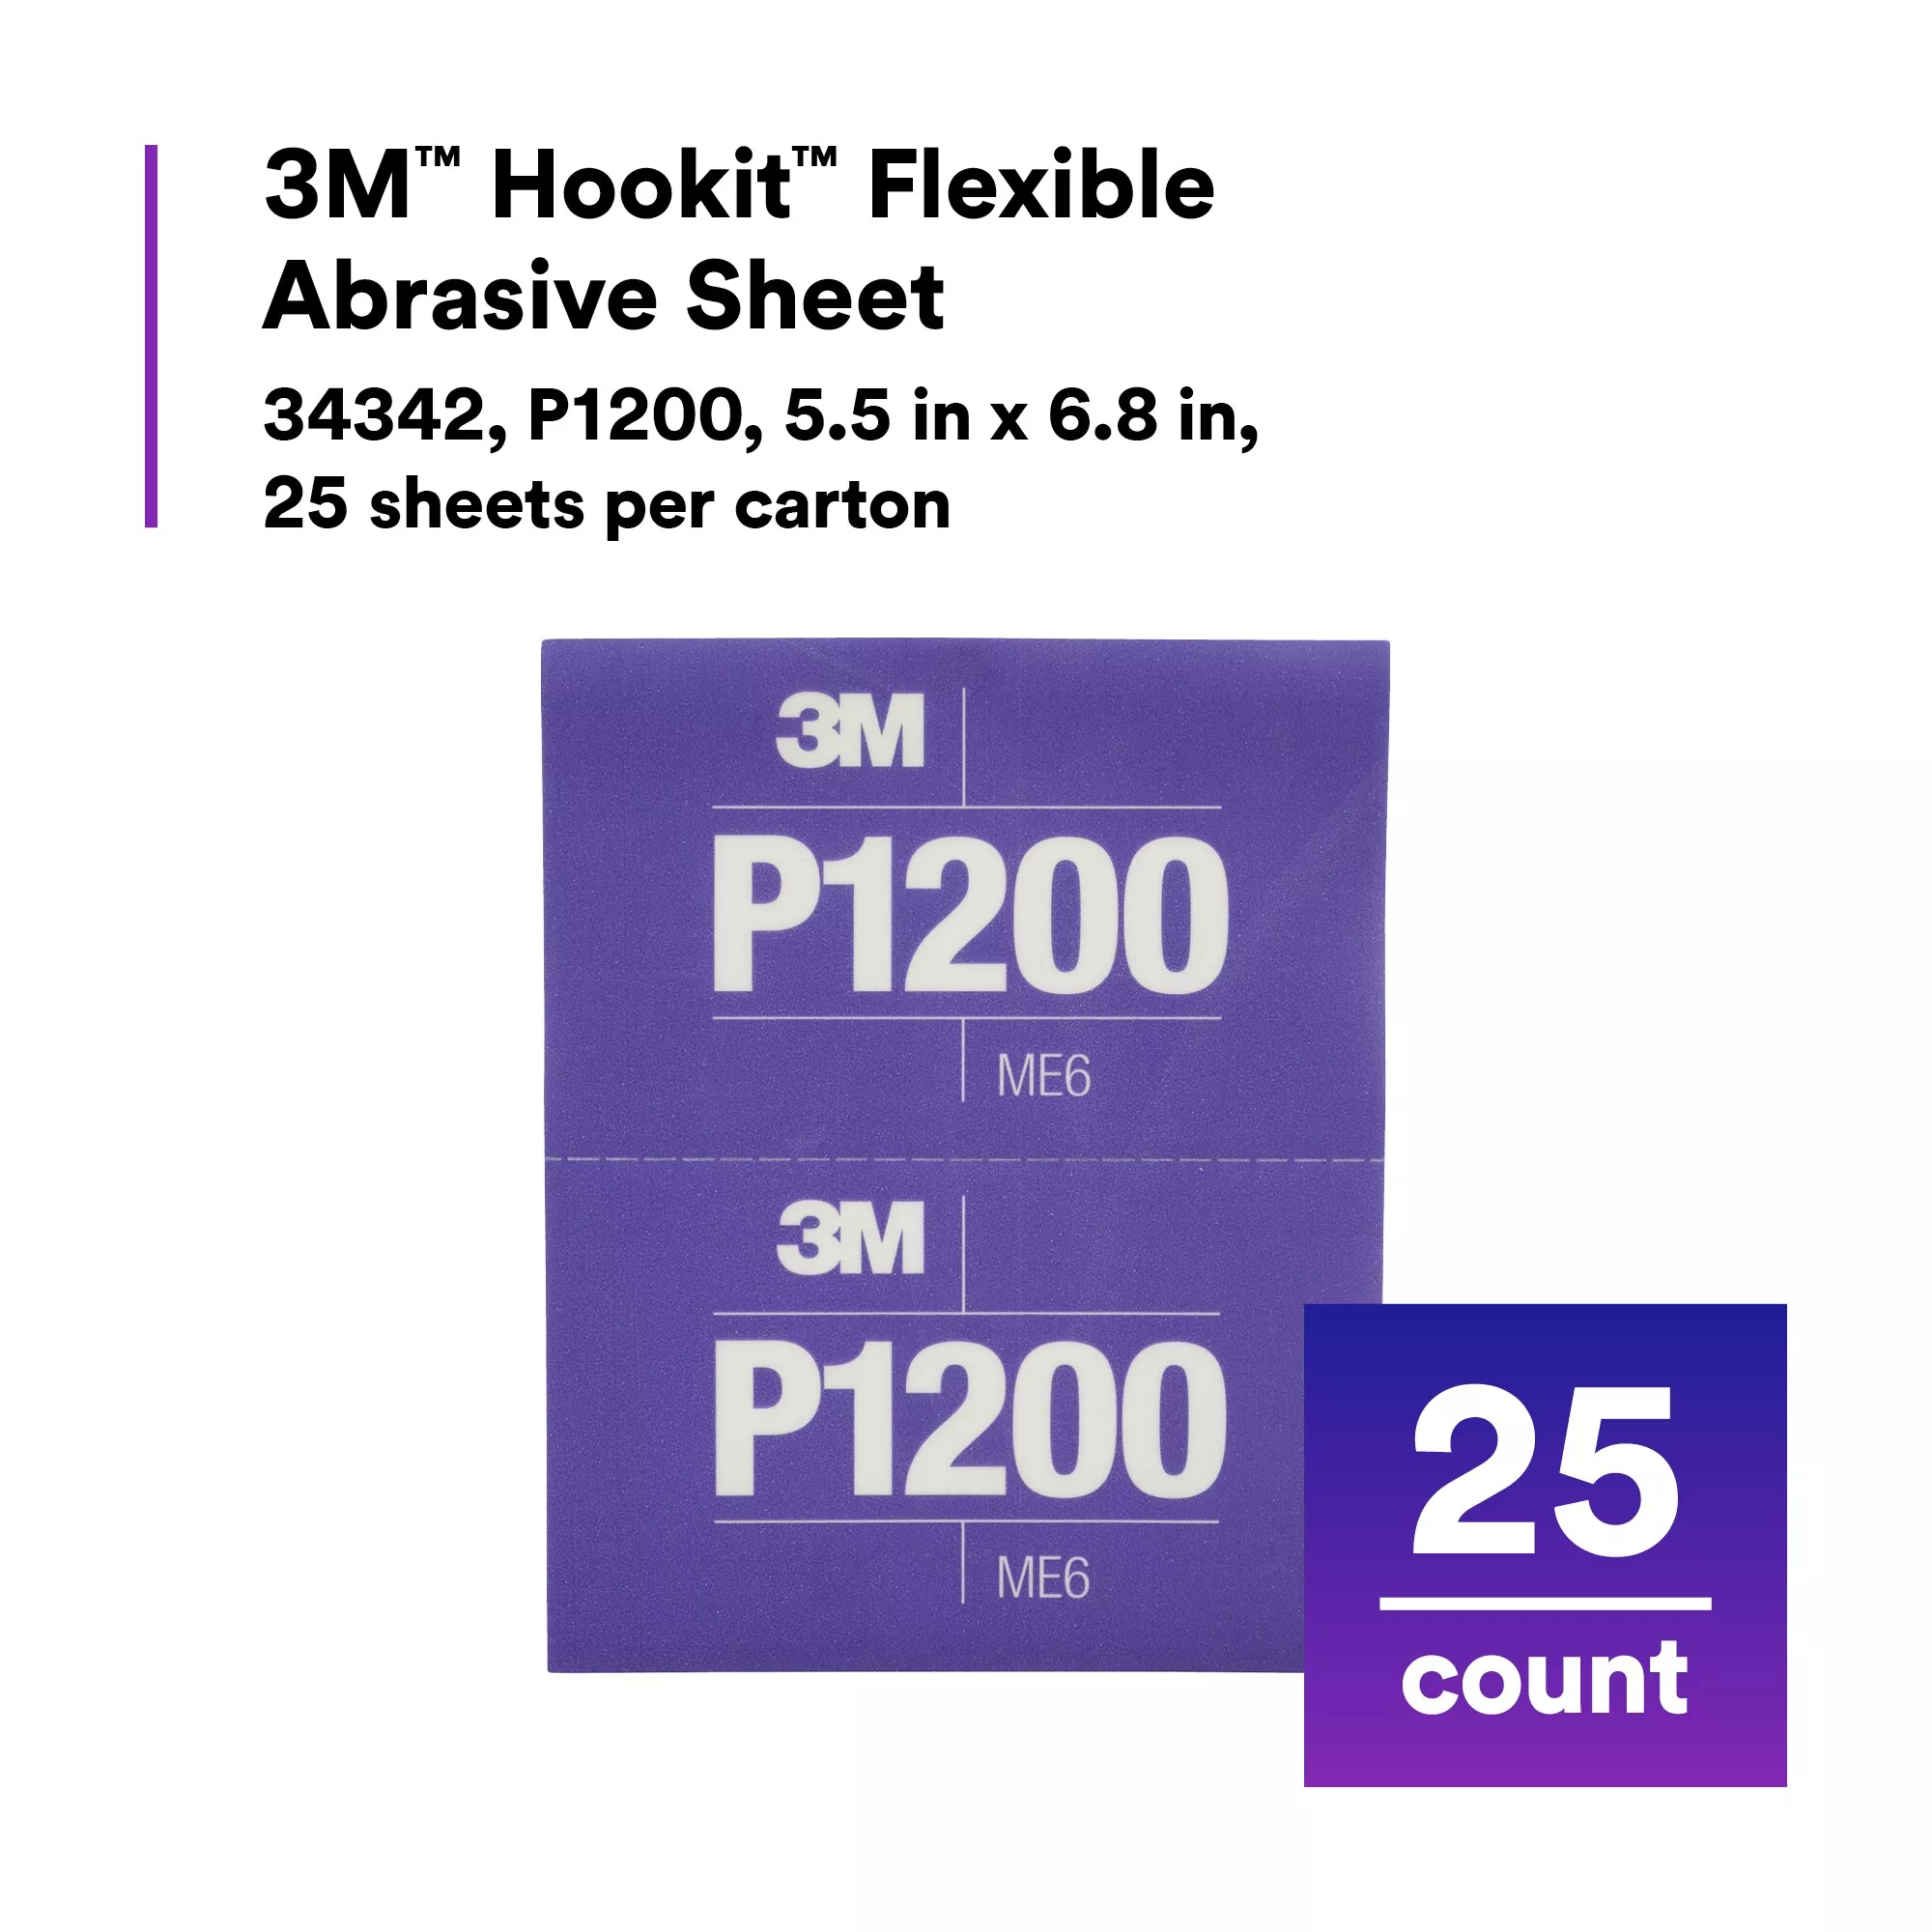 SKU 7100010568 | 3M™ Hookit™ Flexible Abrasive Sheet